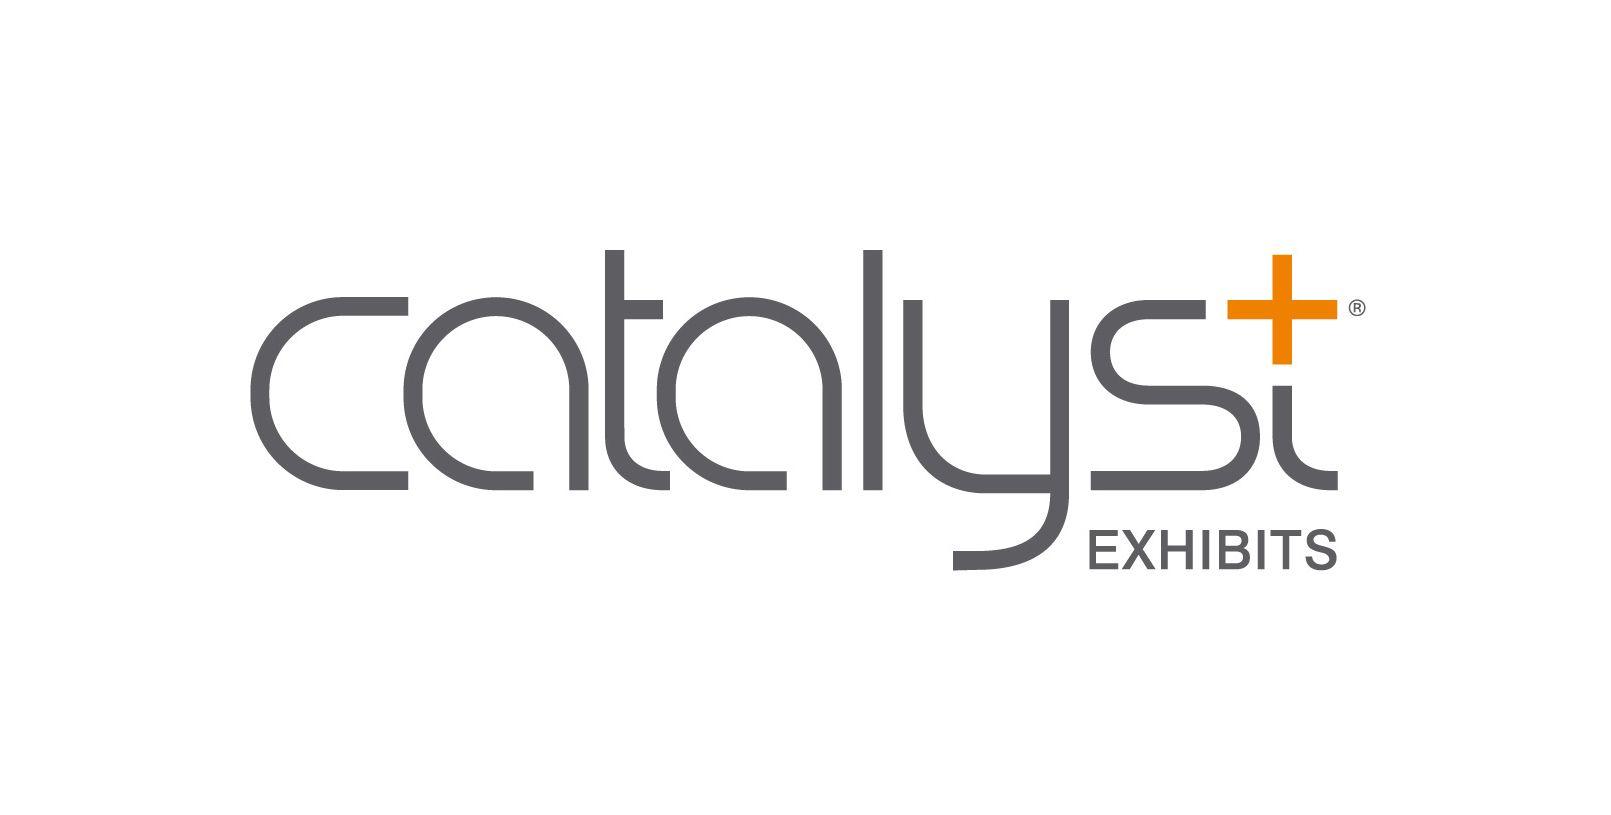 Catalyst Logo - Image result for catalyst logo. Arabian Night. Company logo, Logos